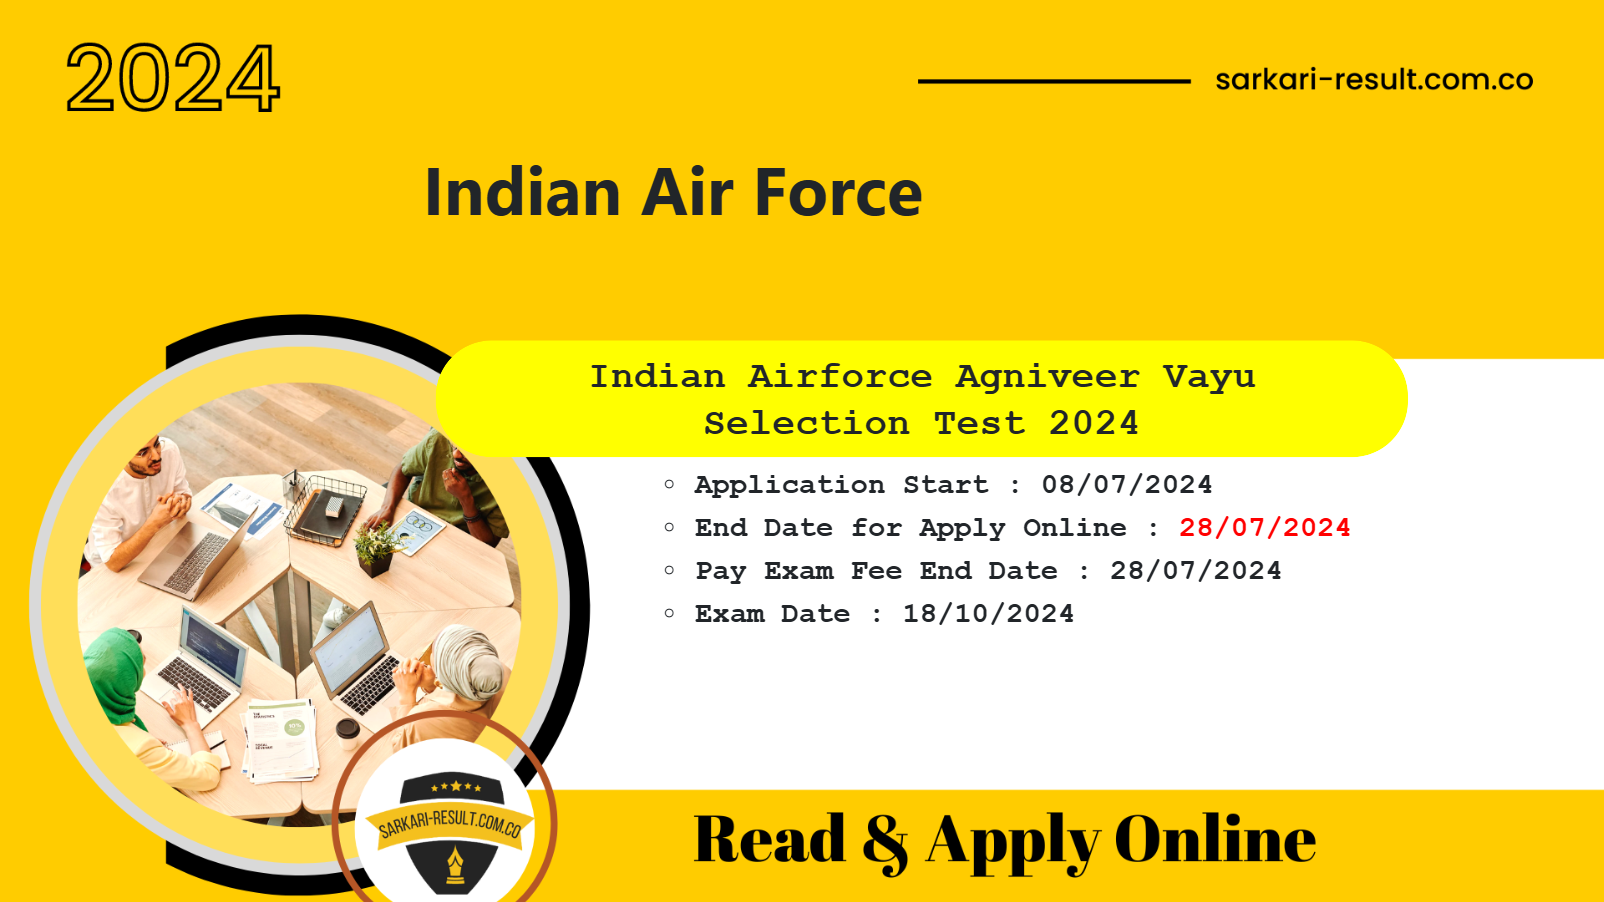 Airforce Agniveer Vayu Intake 02/2025 Batch Online Form 2024